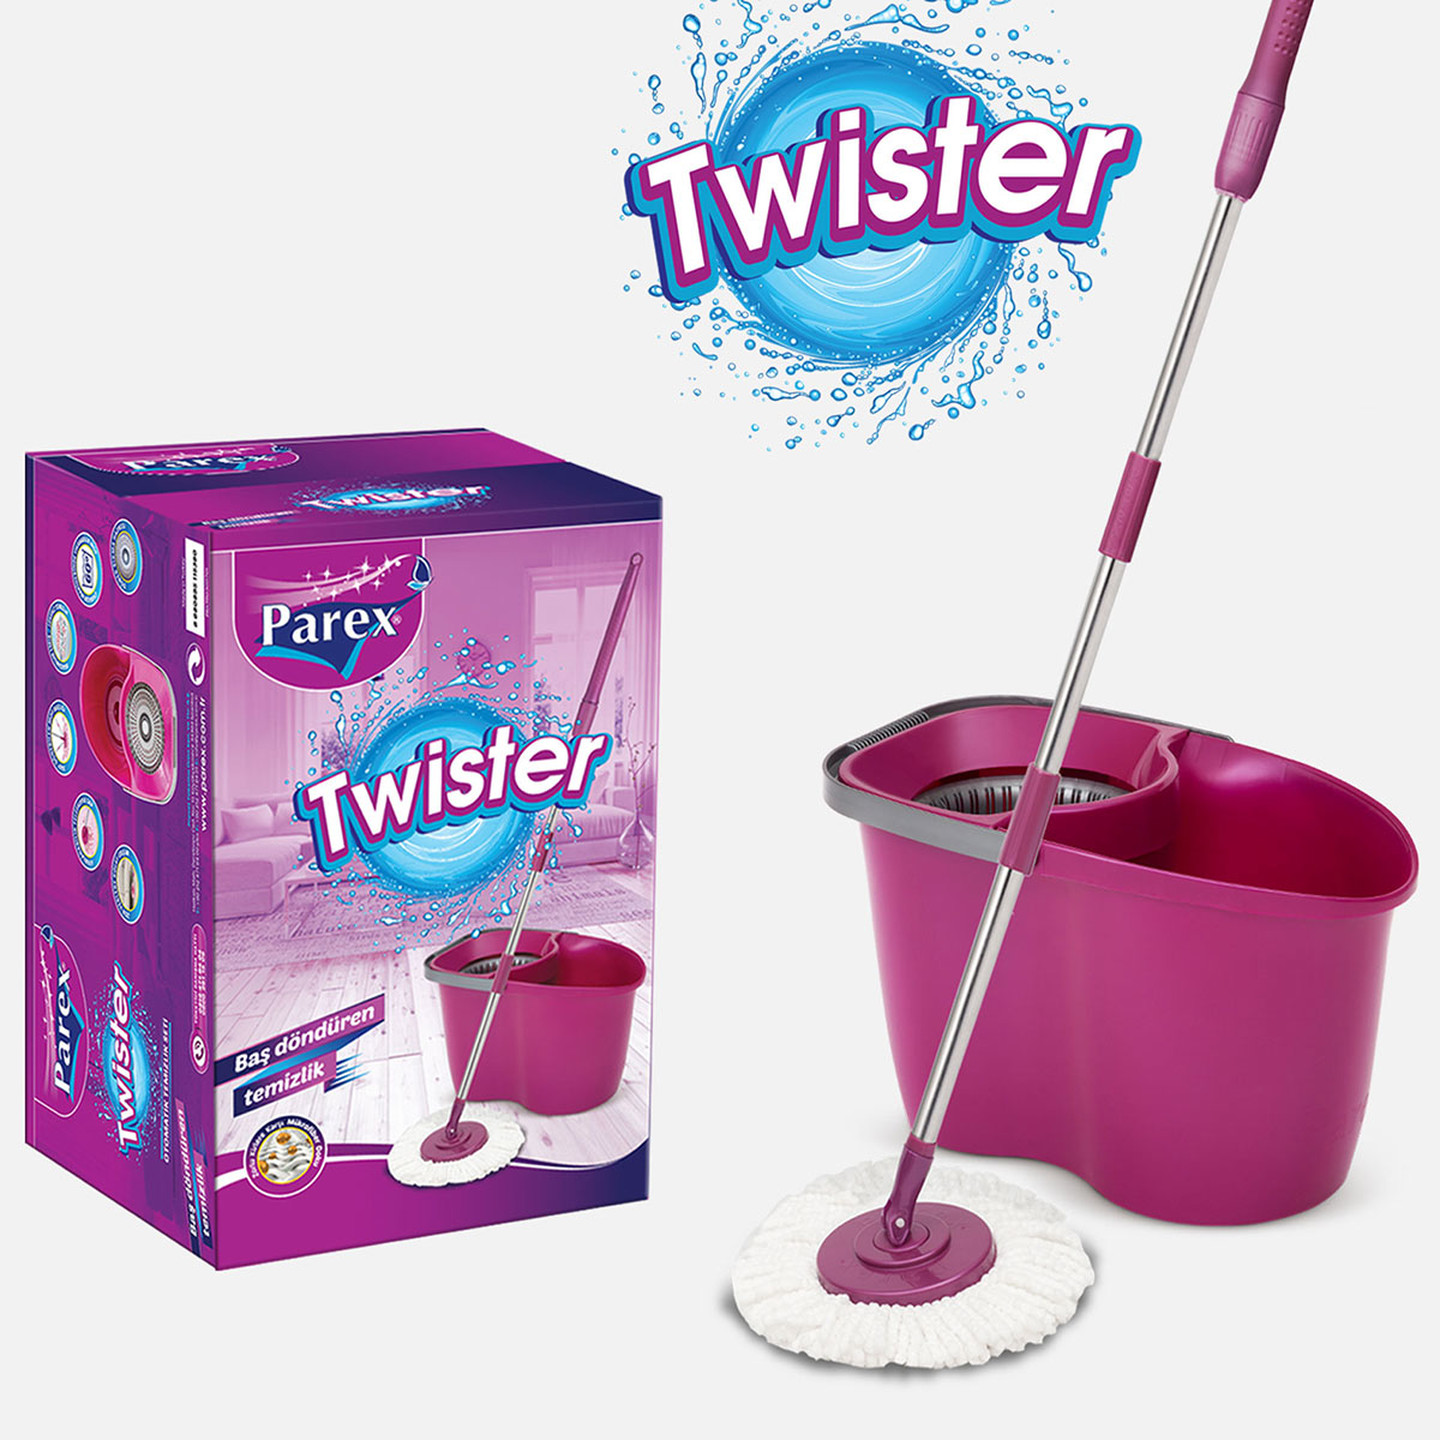 Parex Twister Temizlik Set